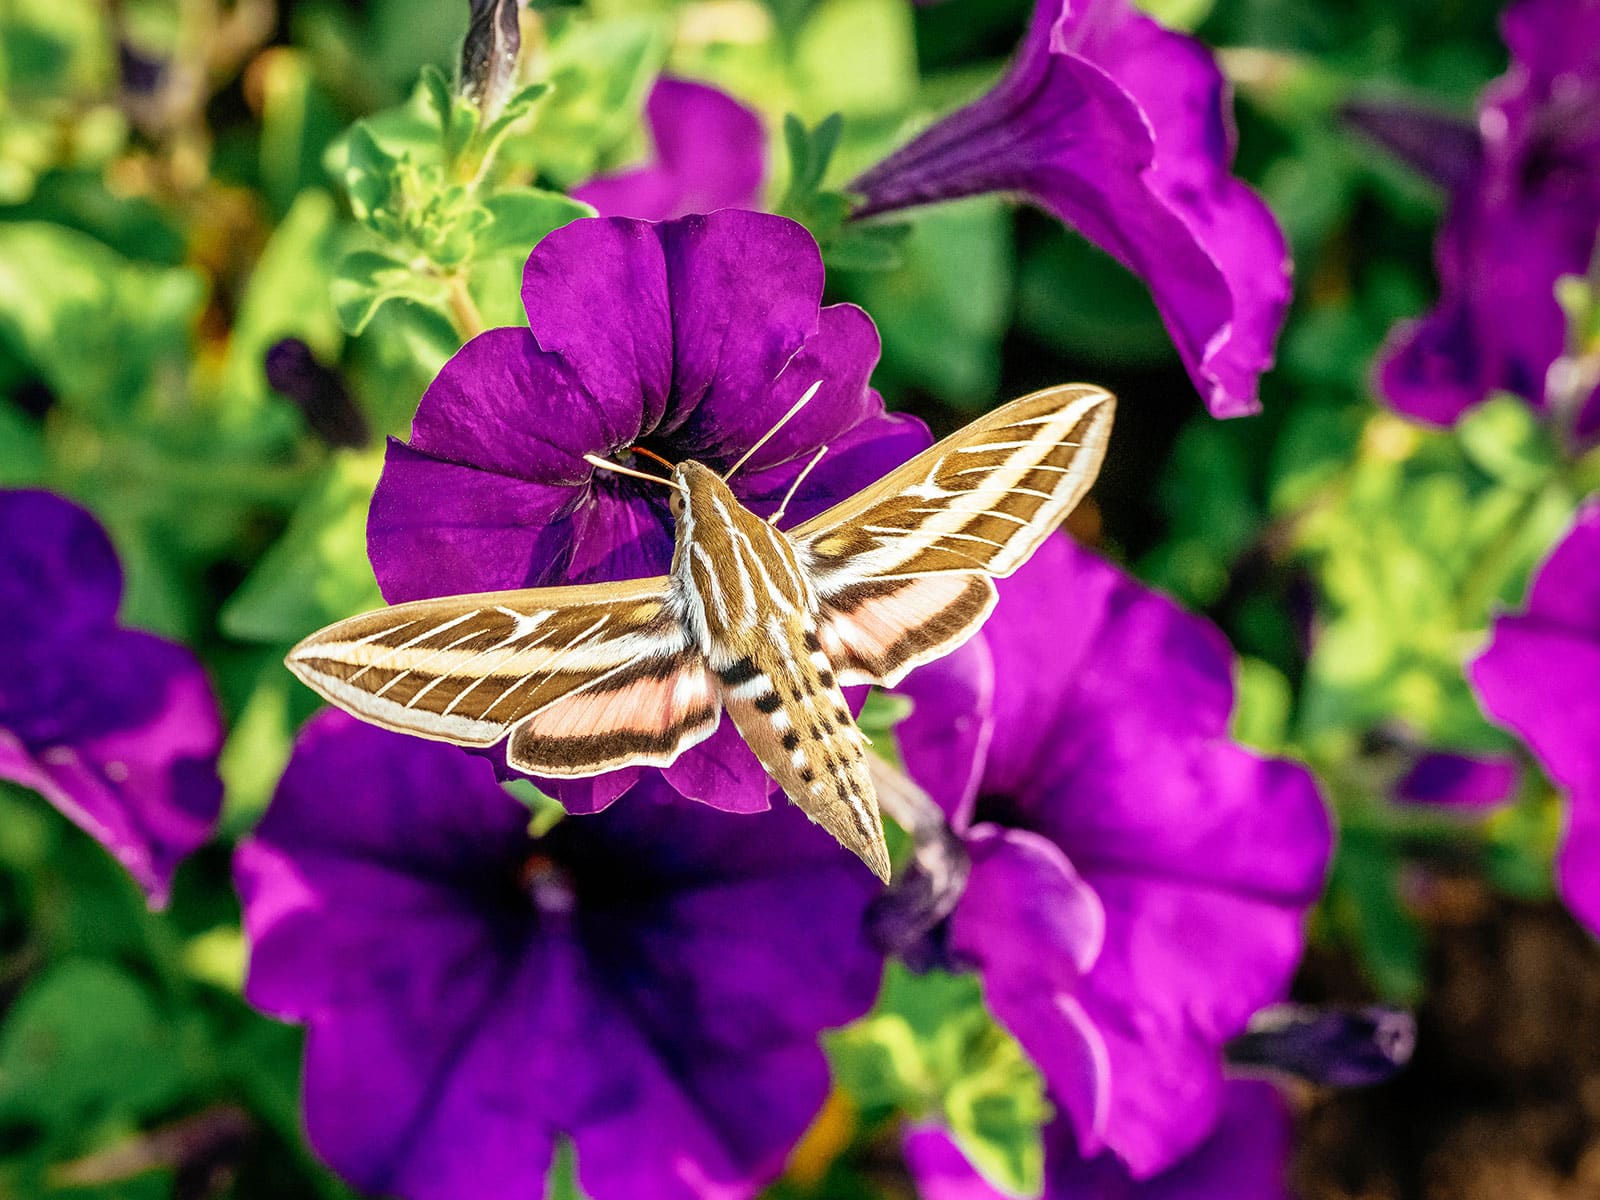 These gorgeous garden moths rival the beauty of butterflies